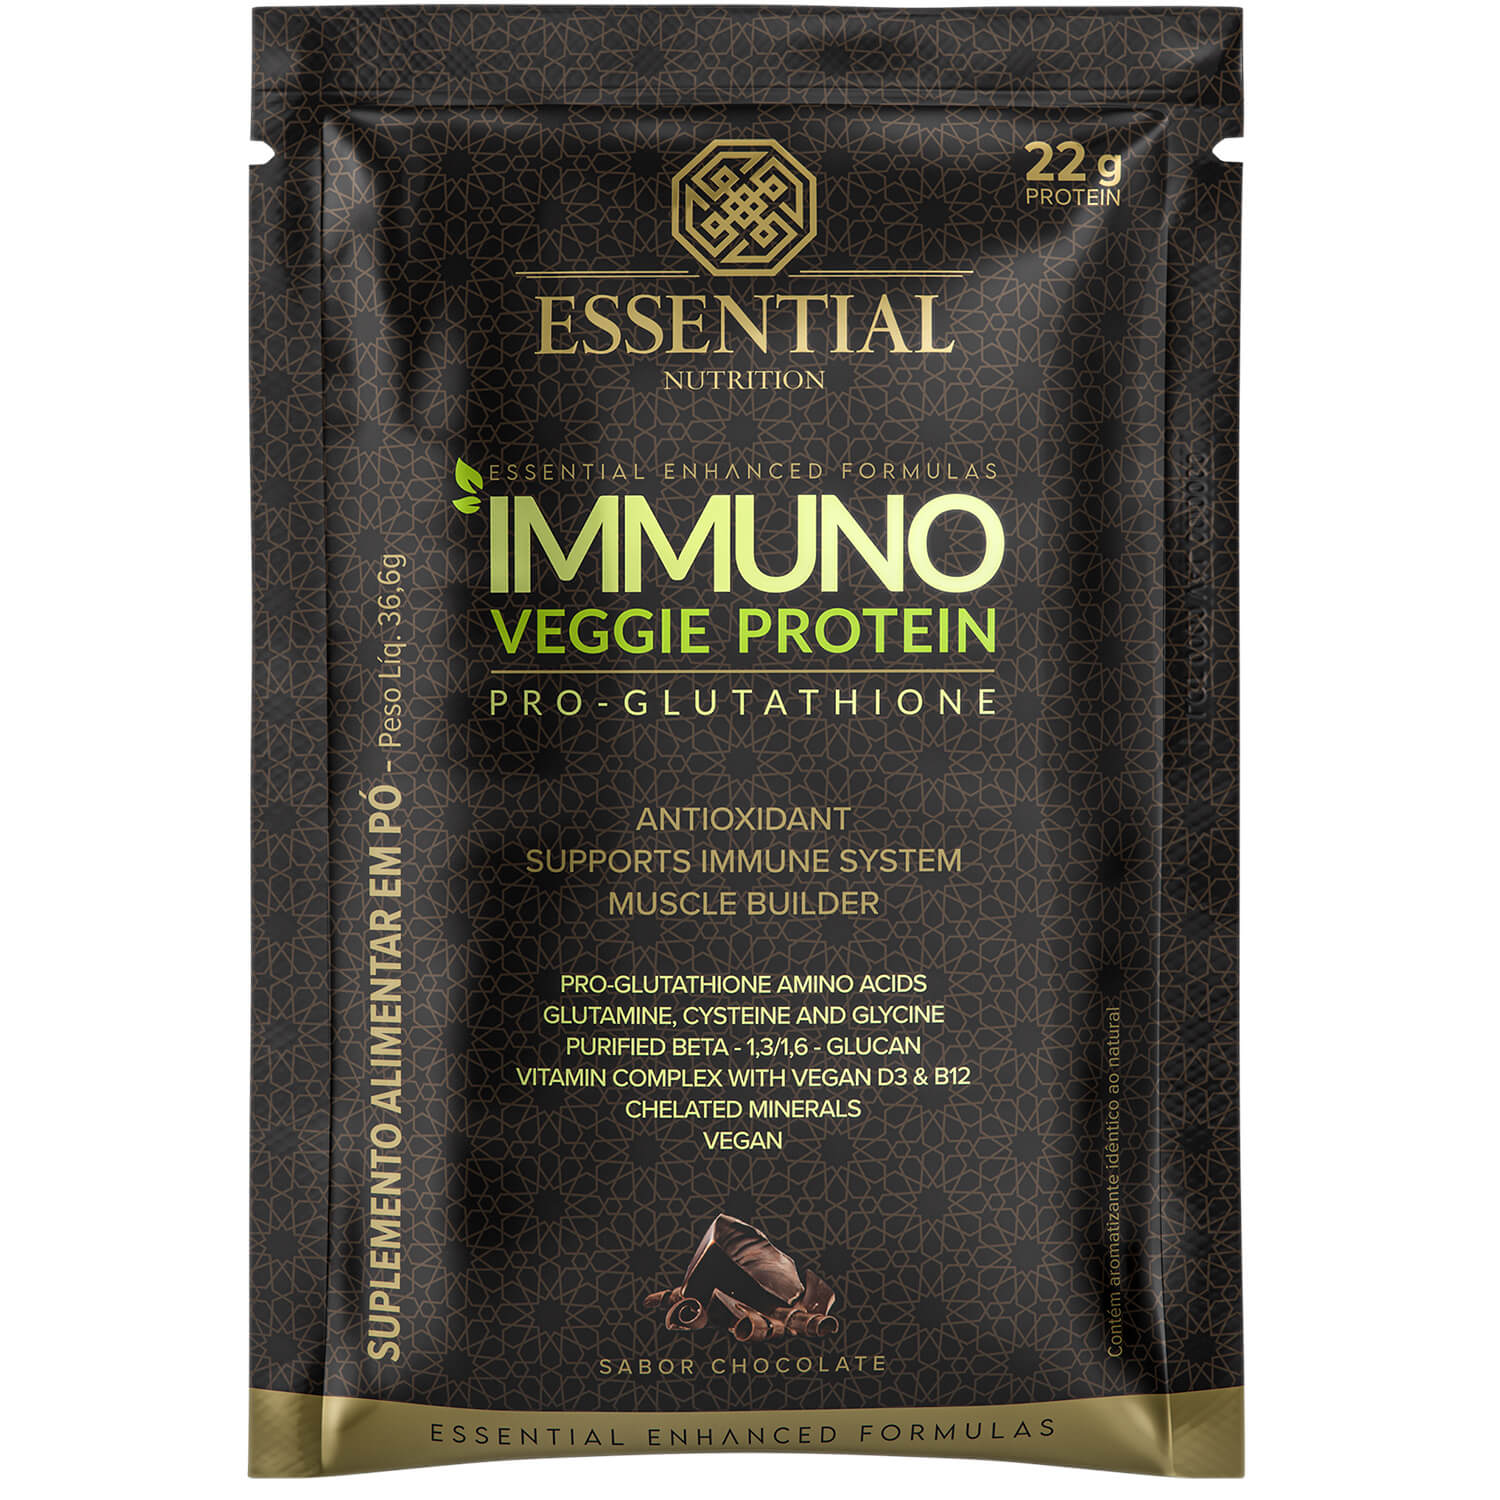 https://meumundofit.com.br/wp-content/uploads/immuno-veggie-pro-glutathione-sache-de-36g-chocolate-essential.jpg